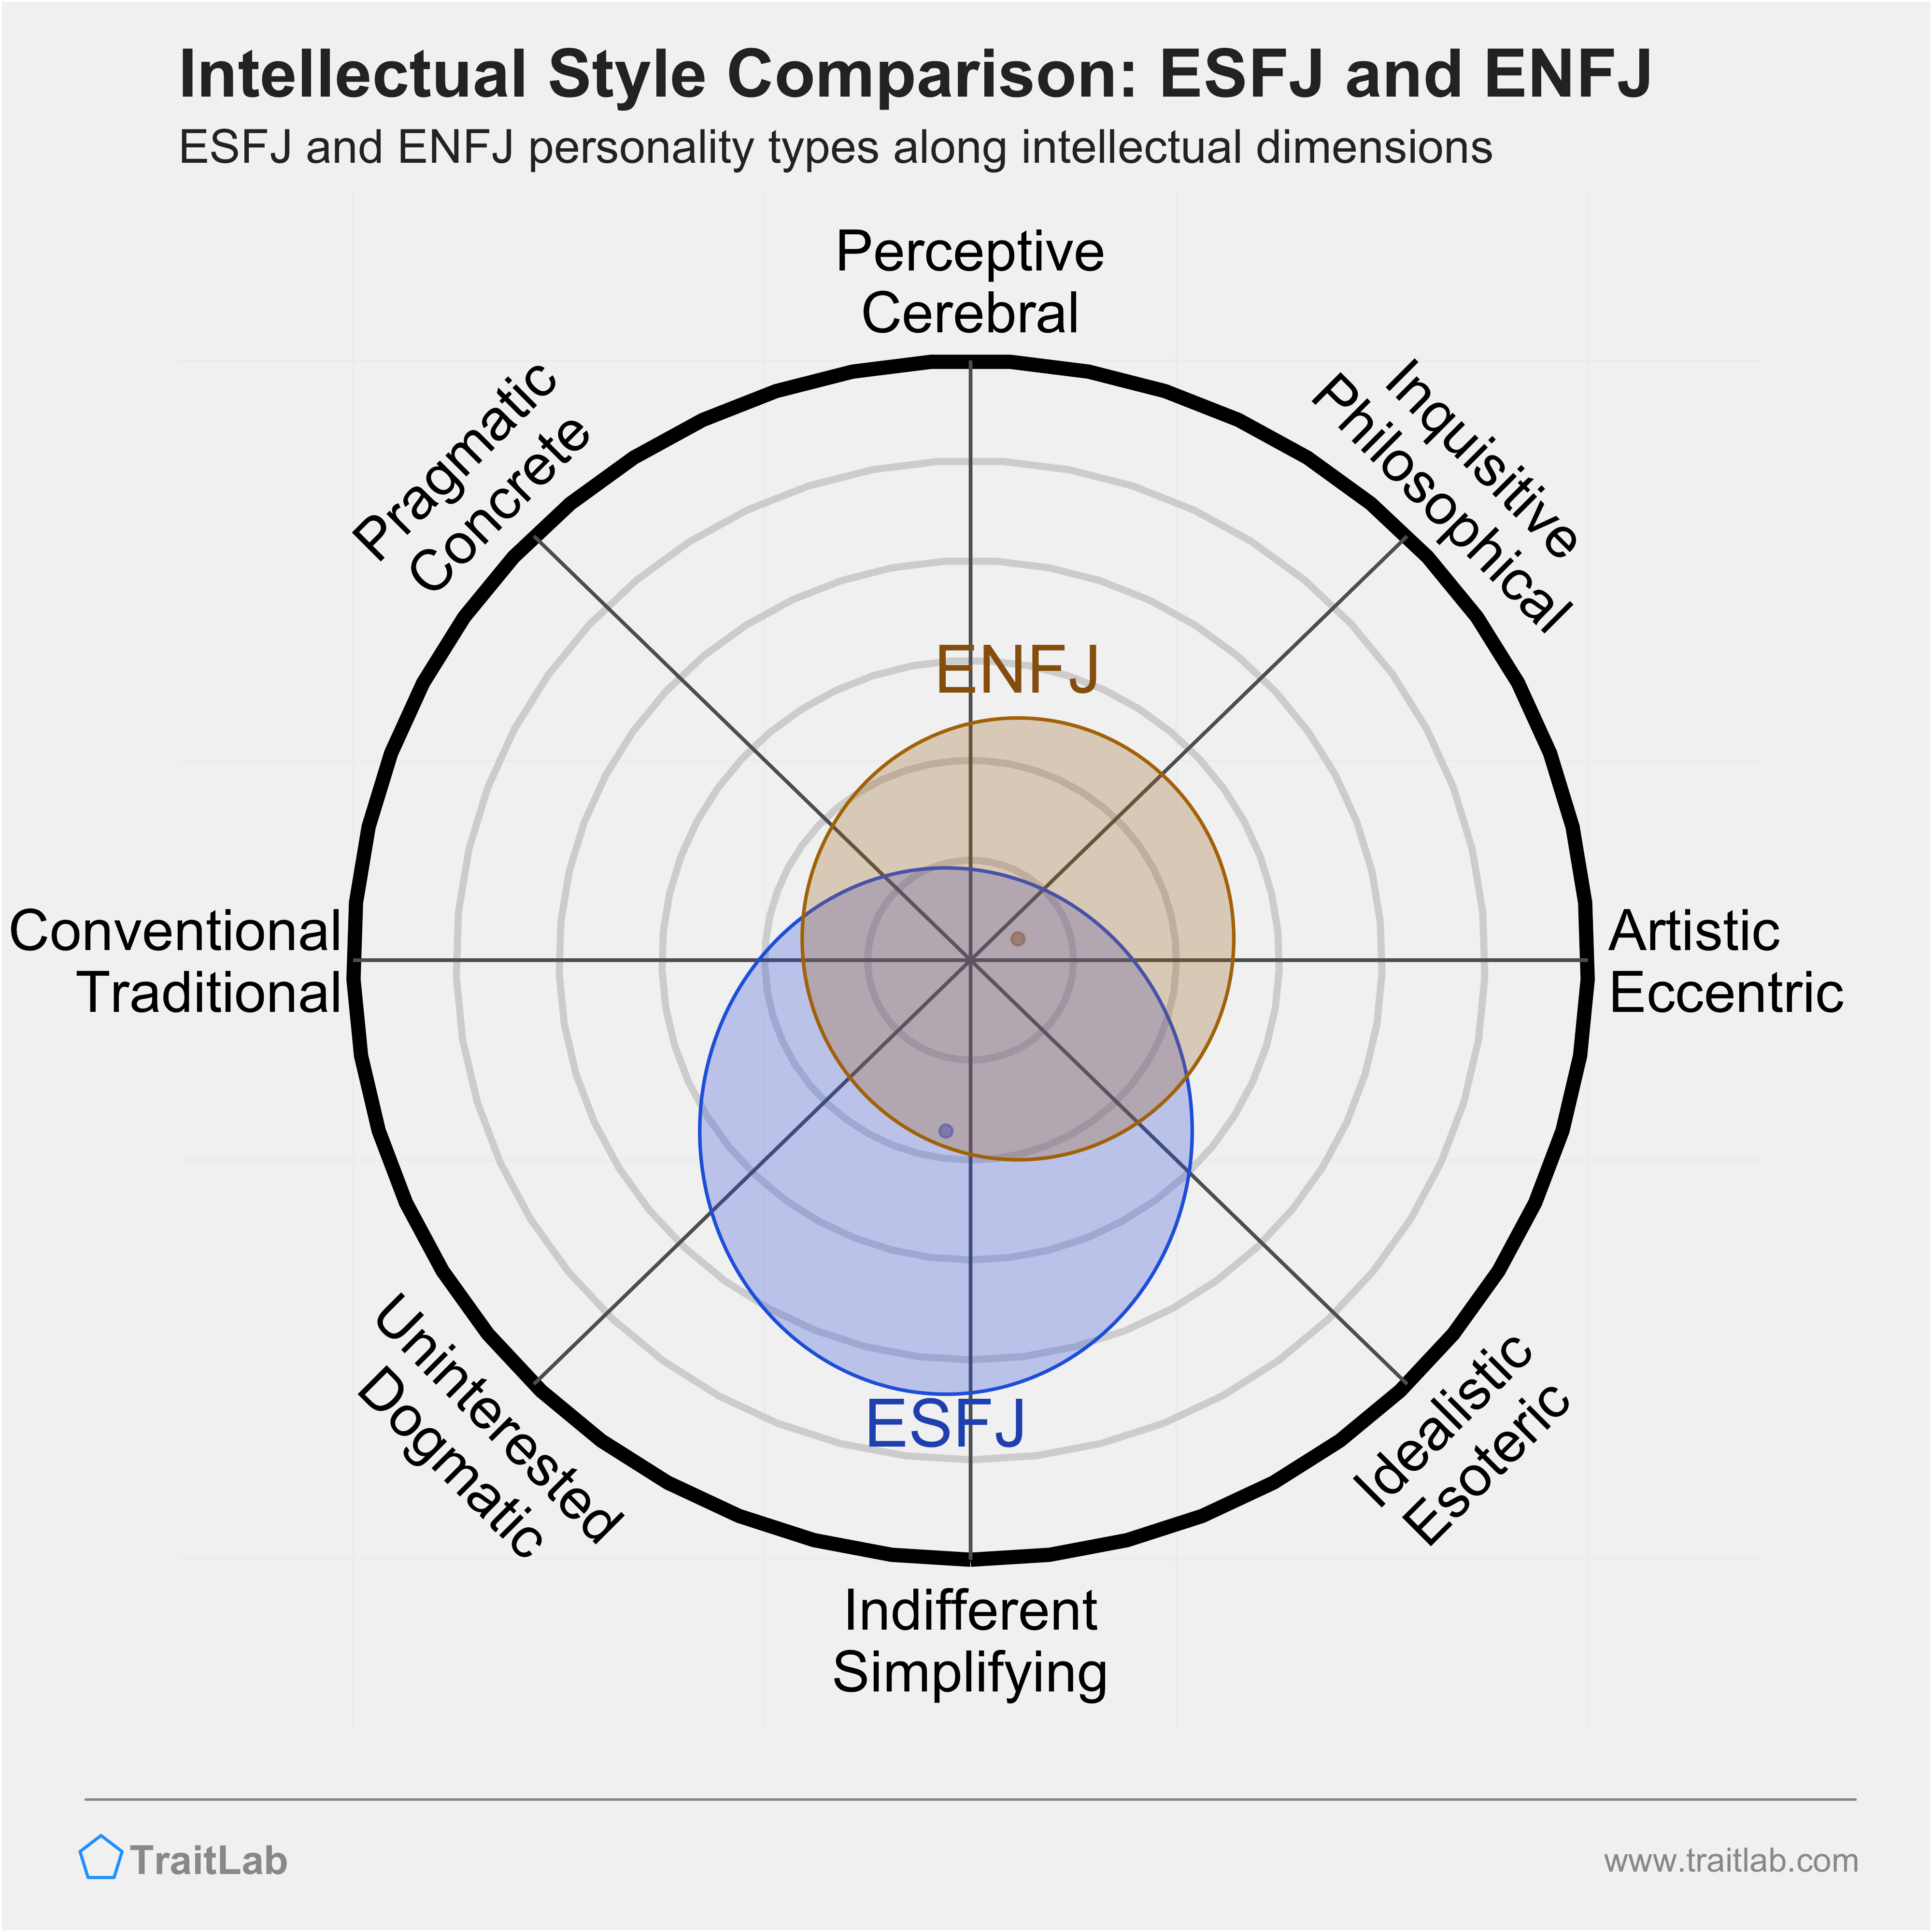 ESFJ and ENFJ comparison across intellectual dimensions